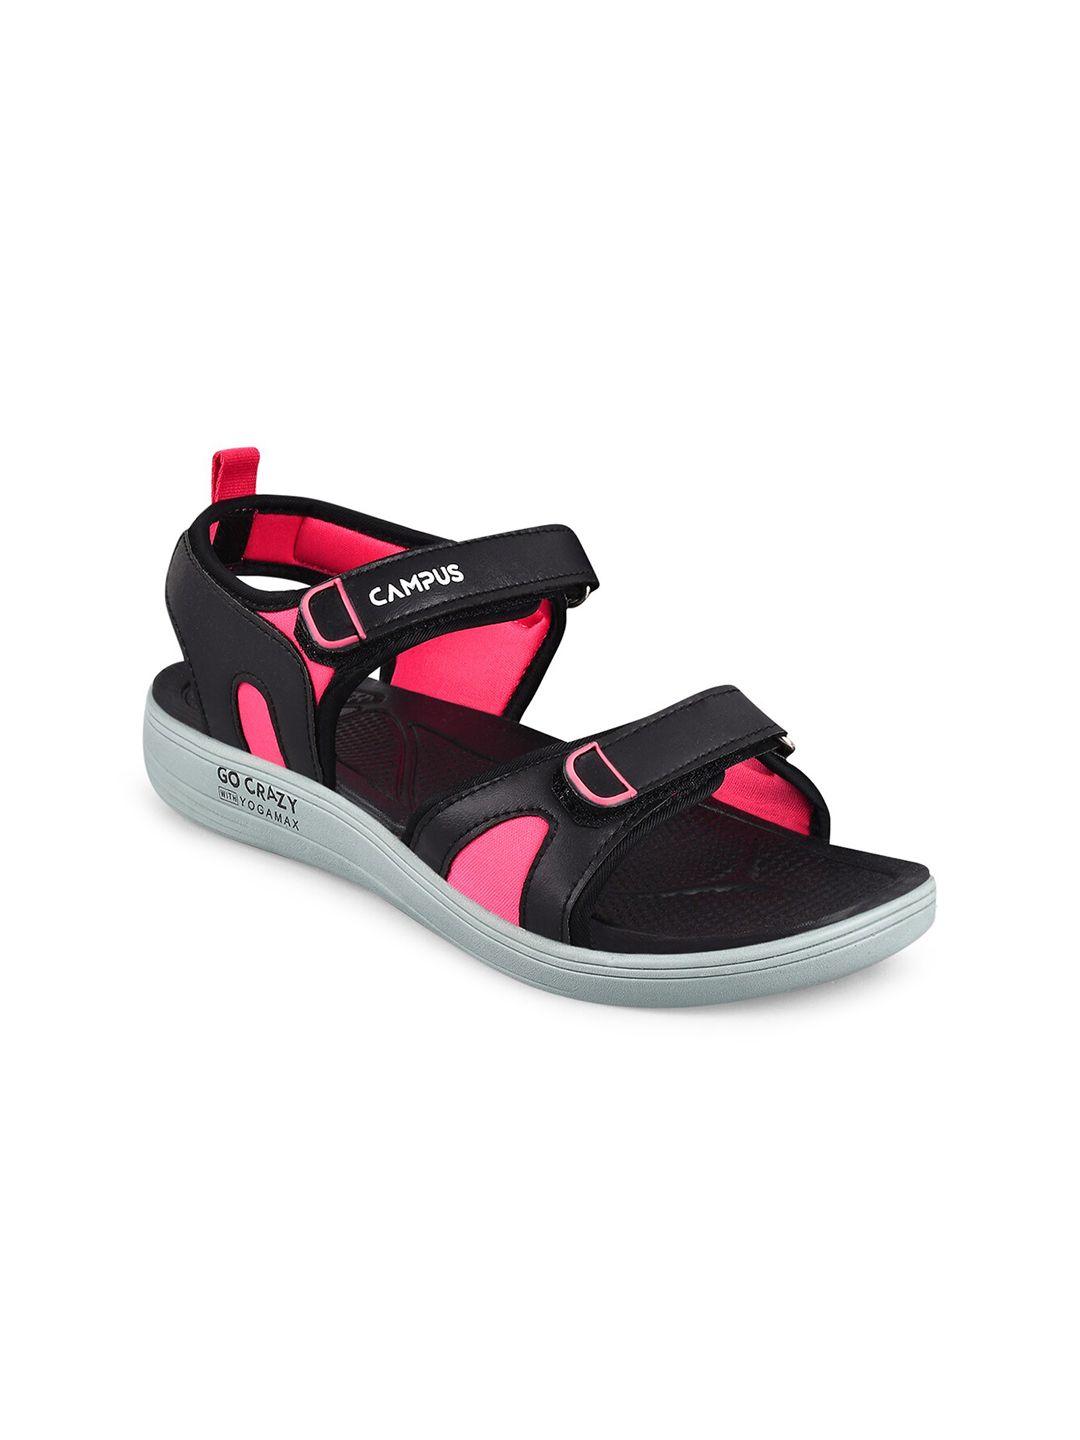 campus women black & pink patterned sports sandals